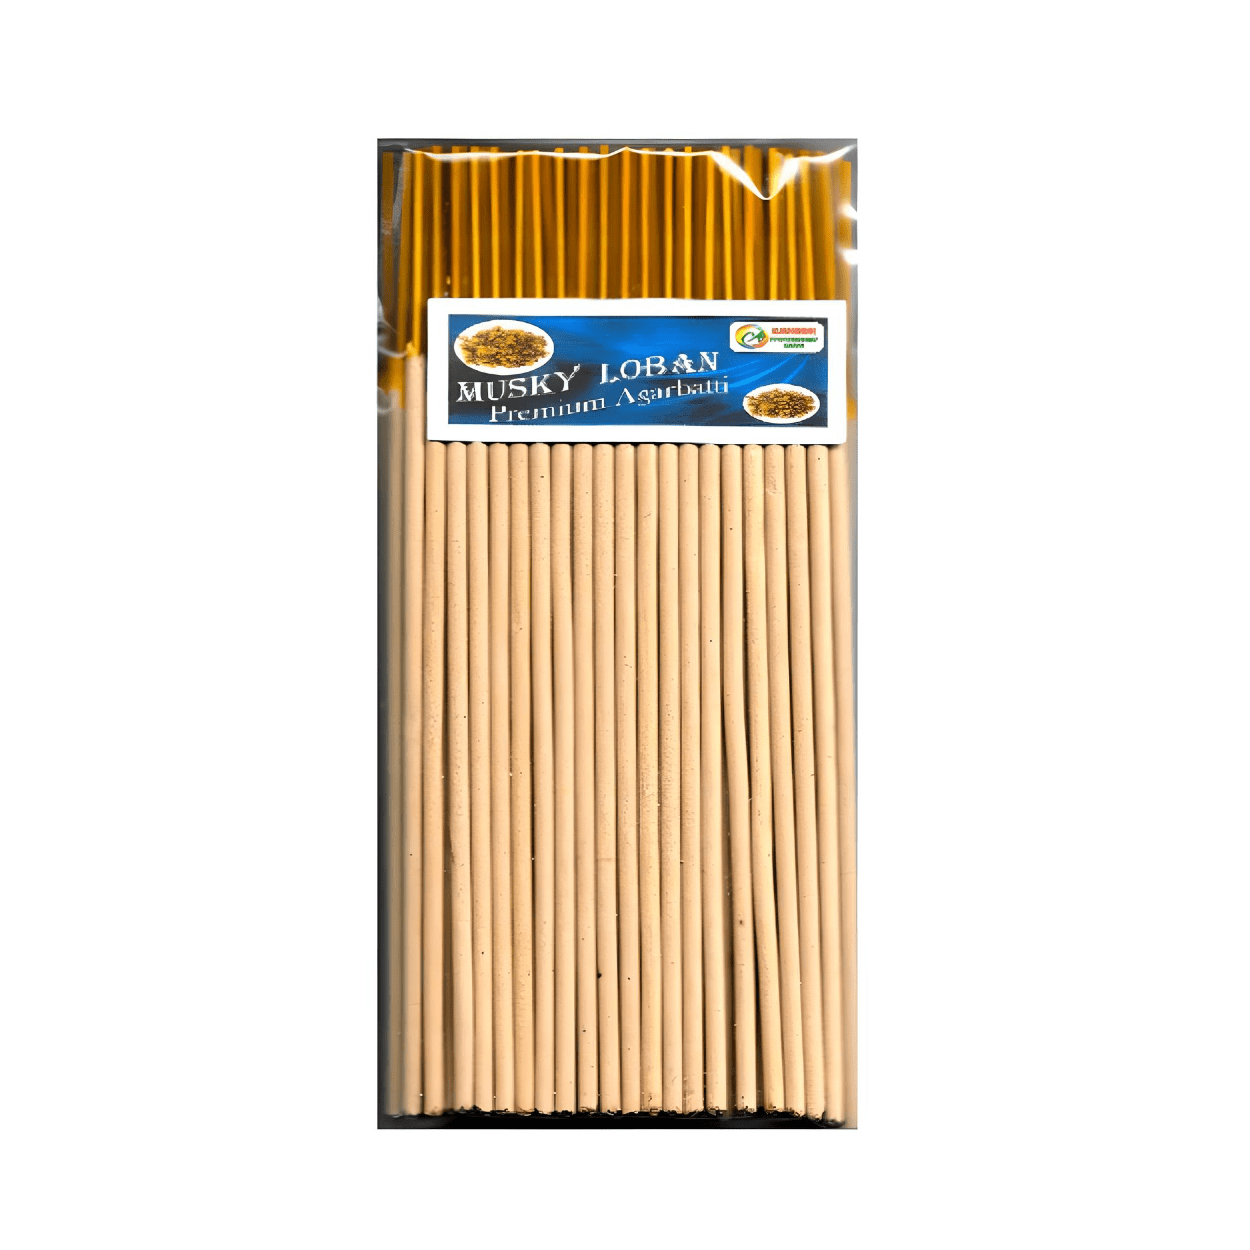 Musky Loban Agarbatti Incense Sticks